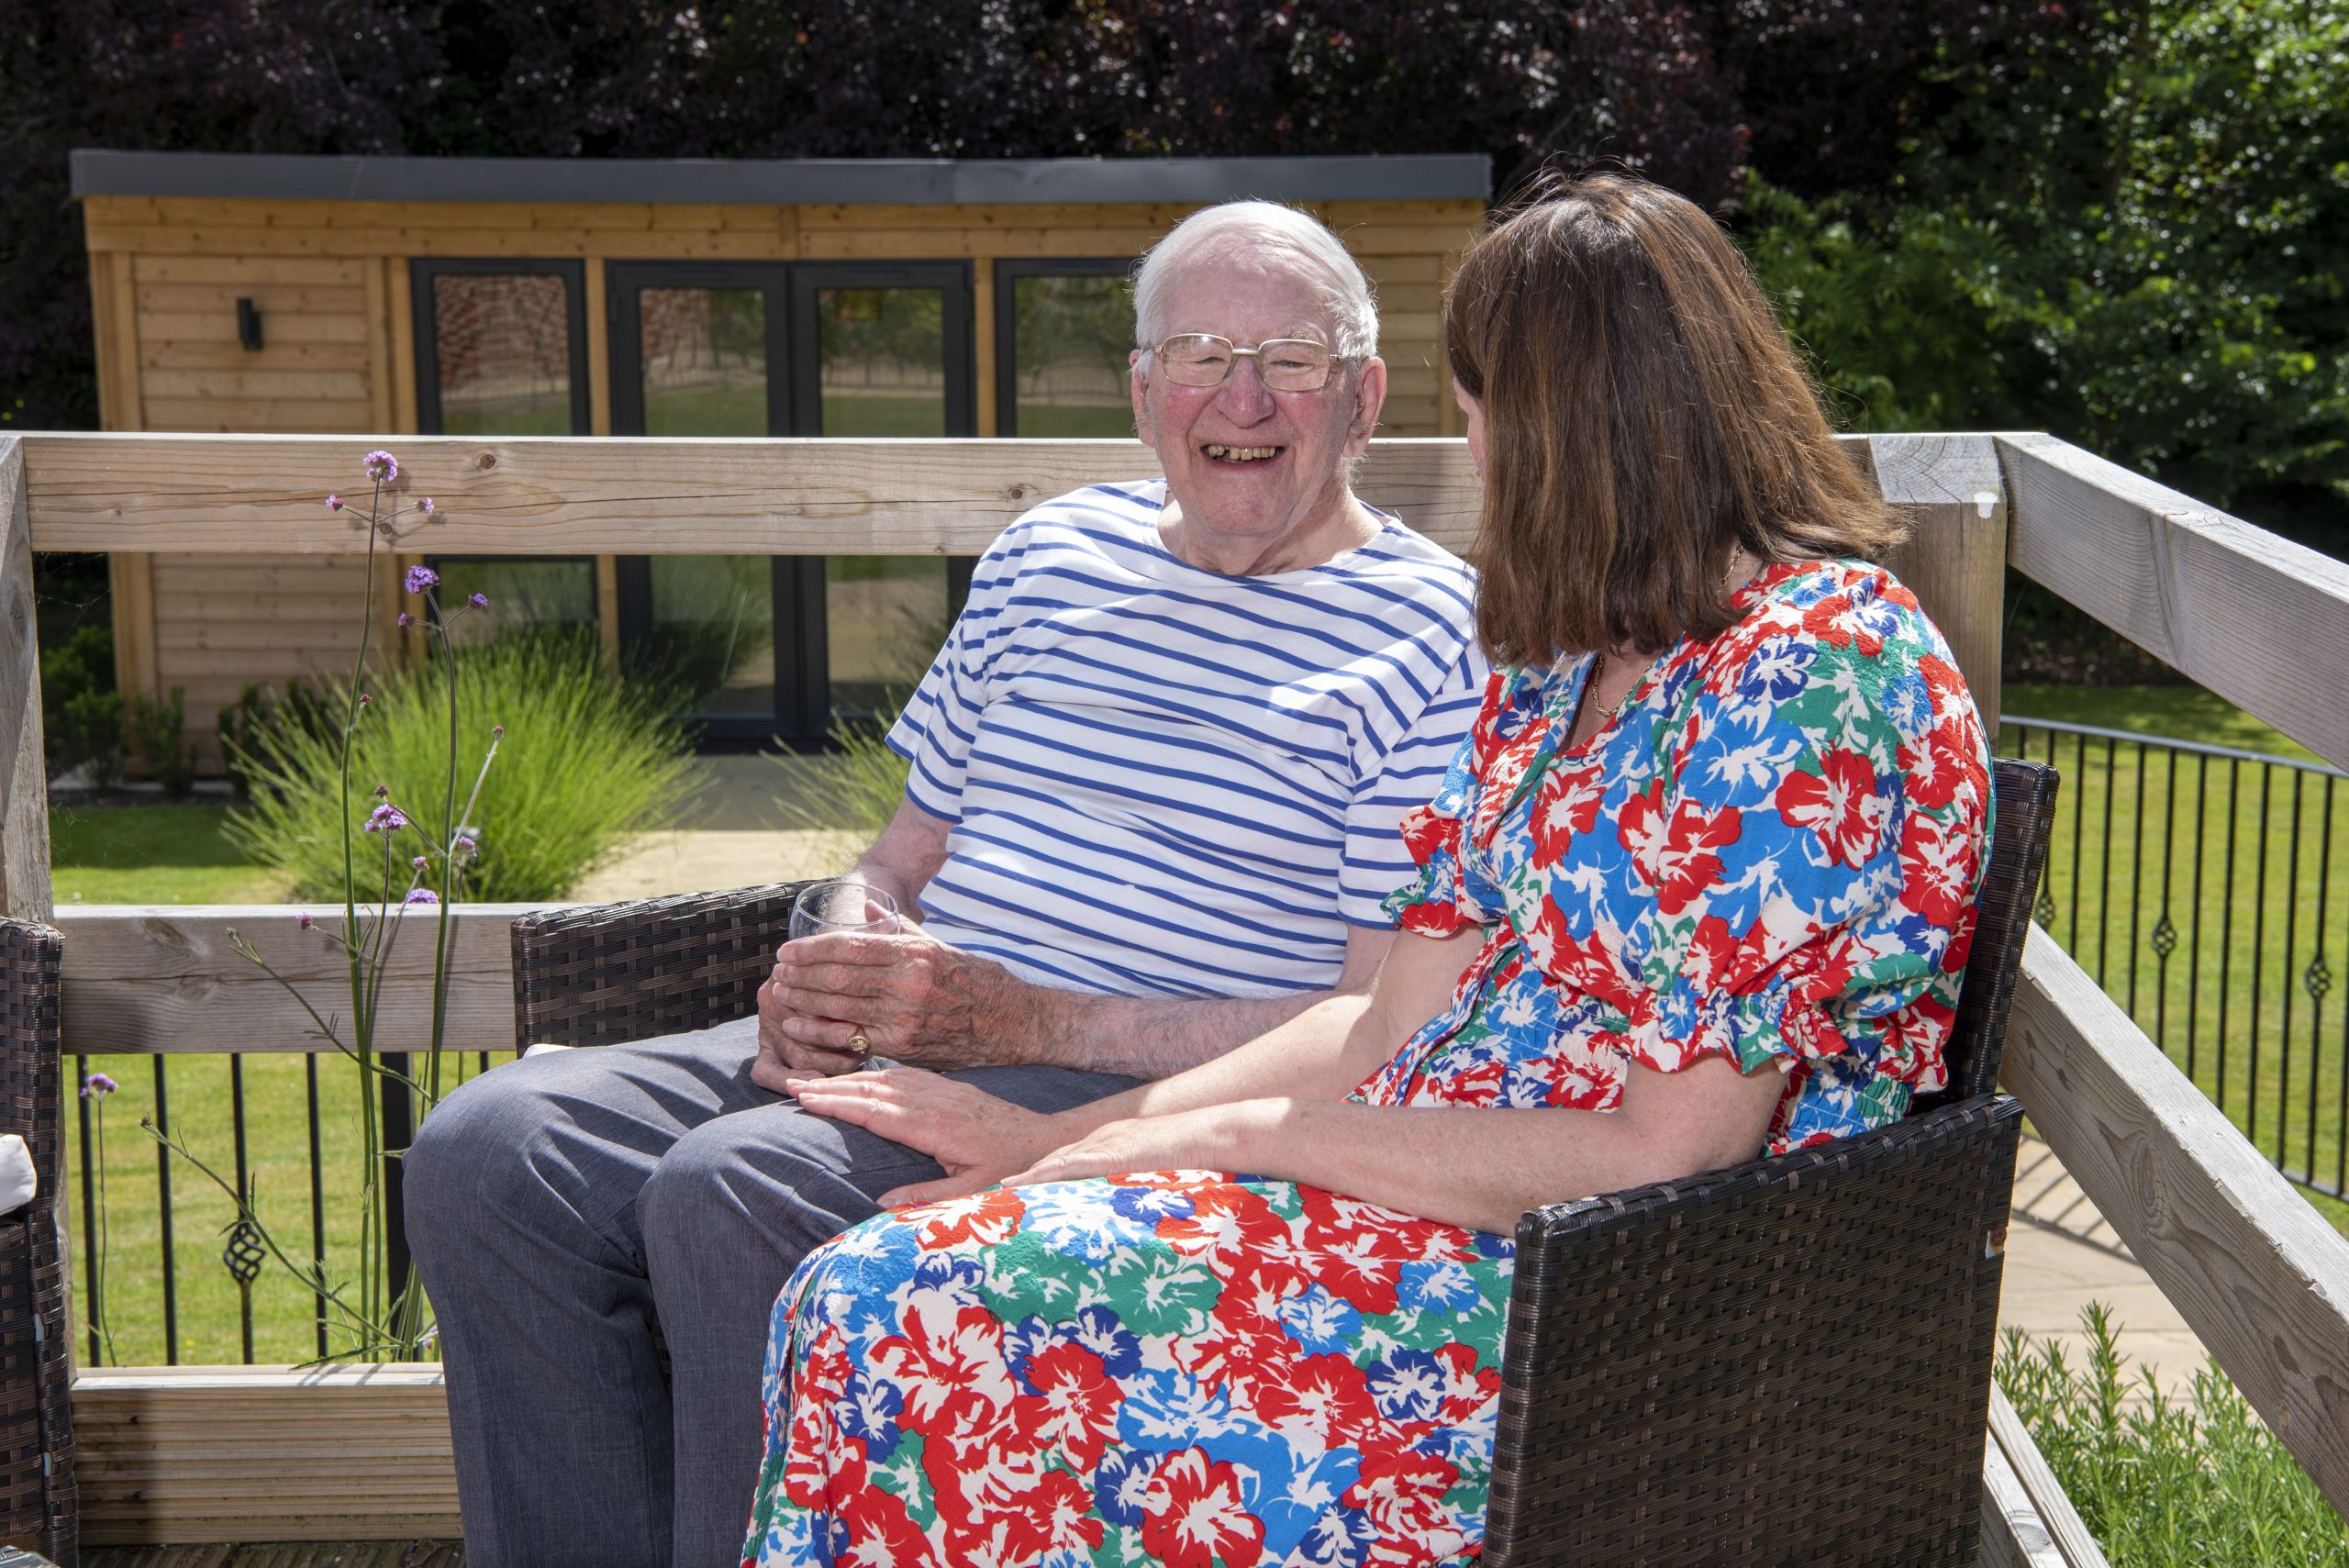 Resident chatting with volunteer in garden